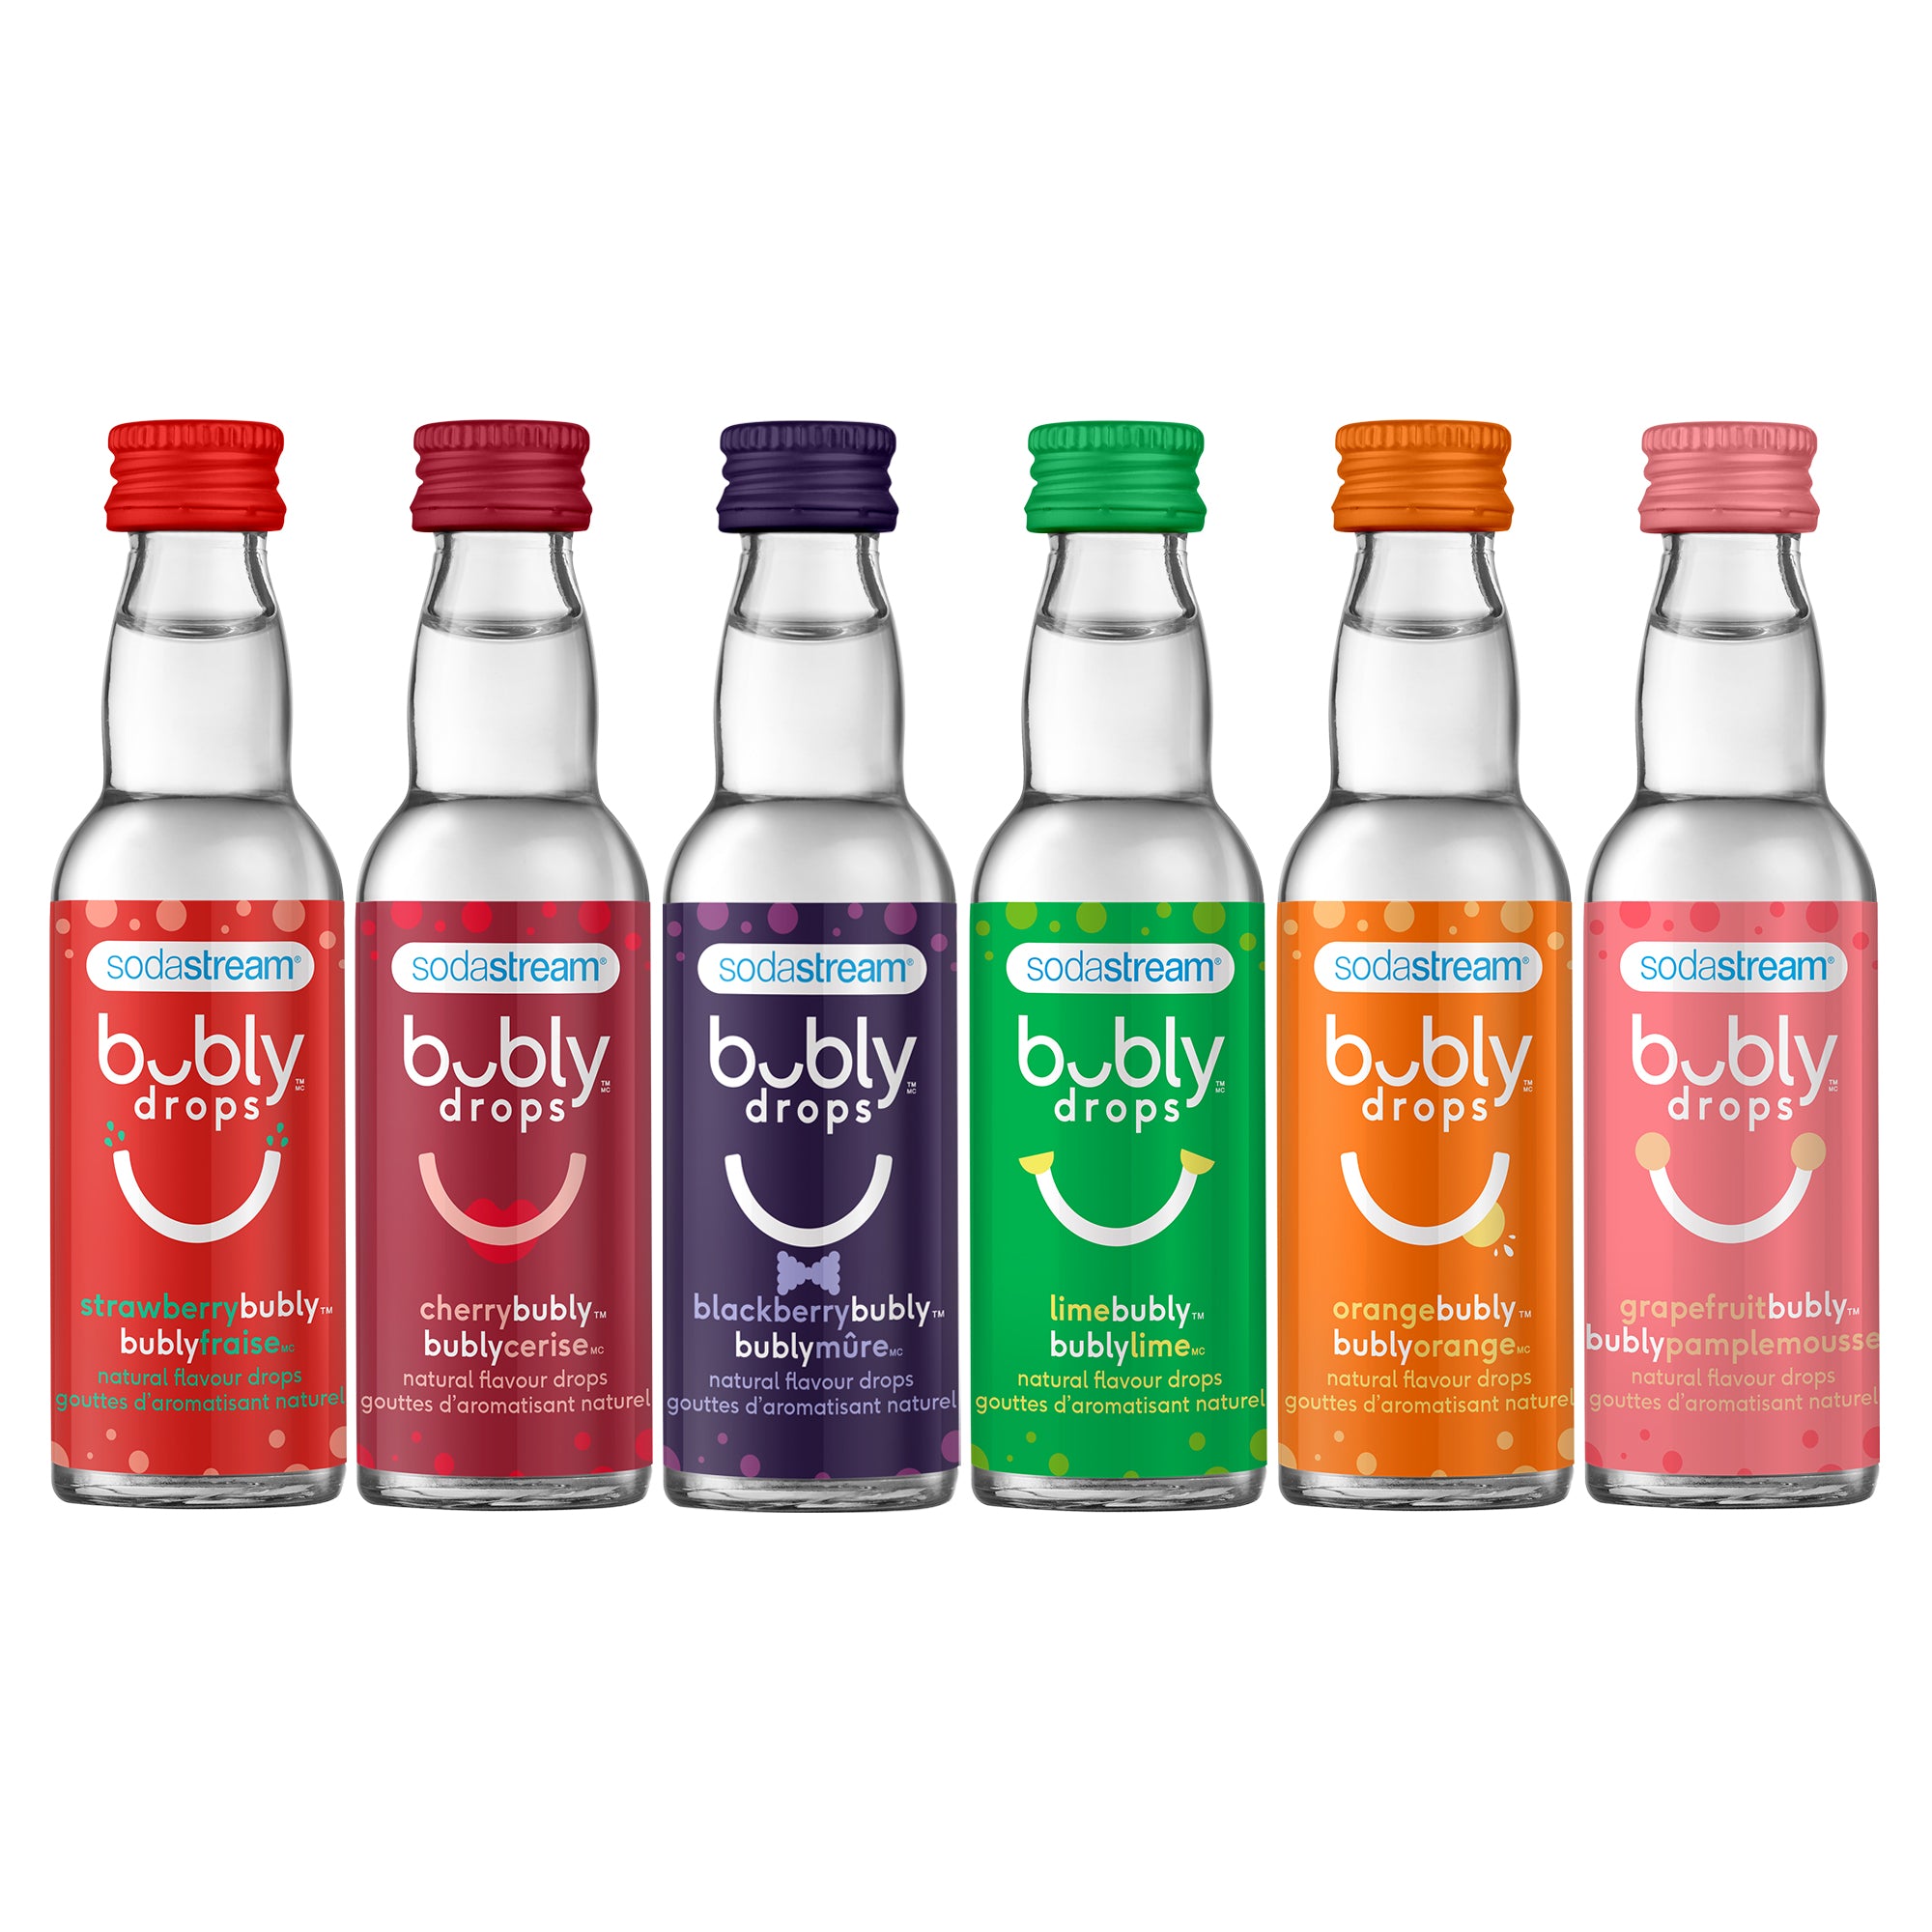 bubly drops™ Original Variety 6-Pack sodastream